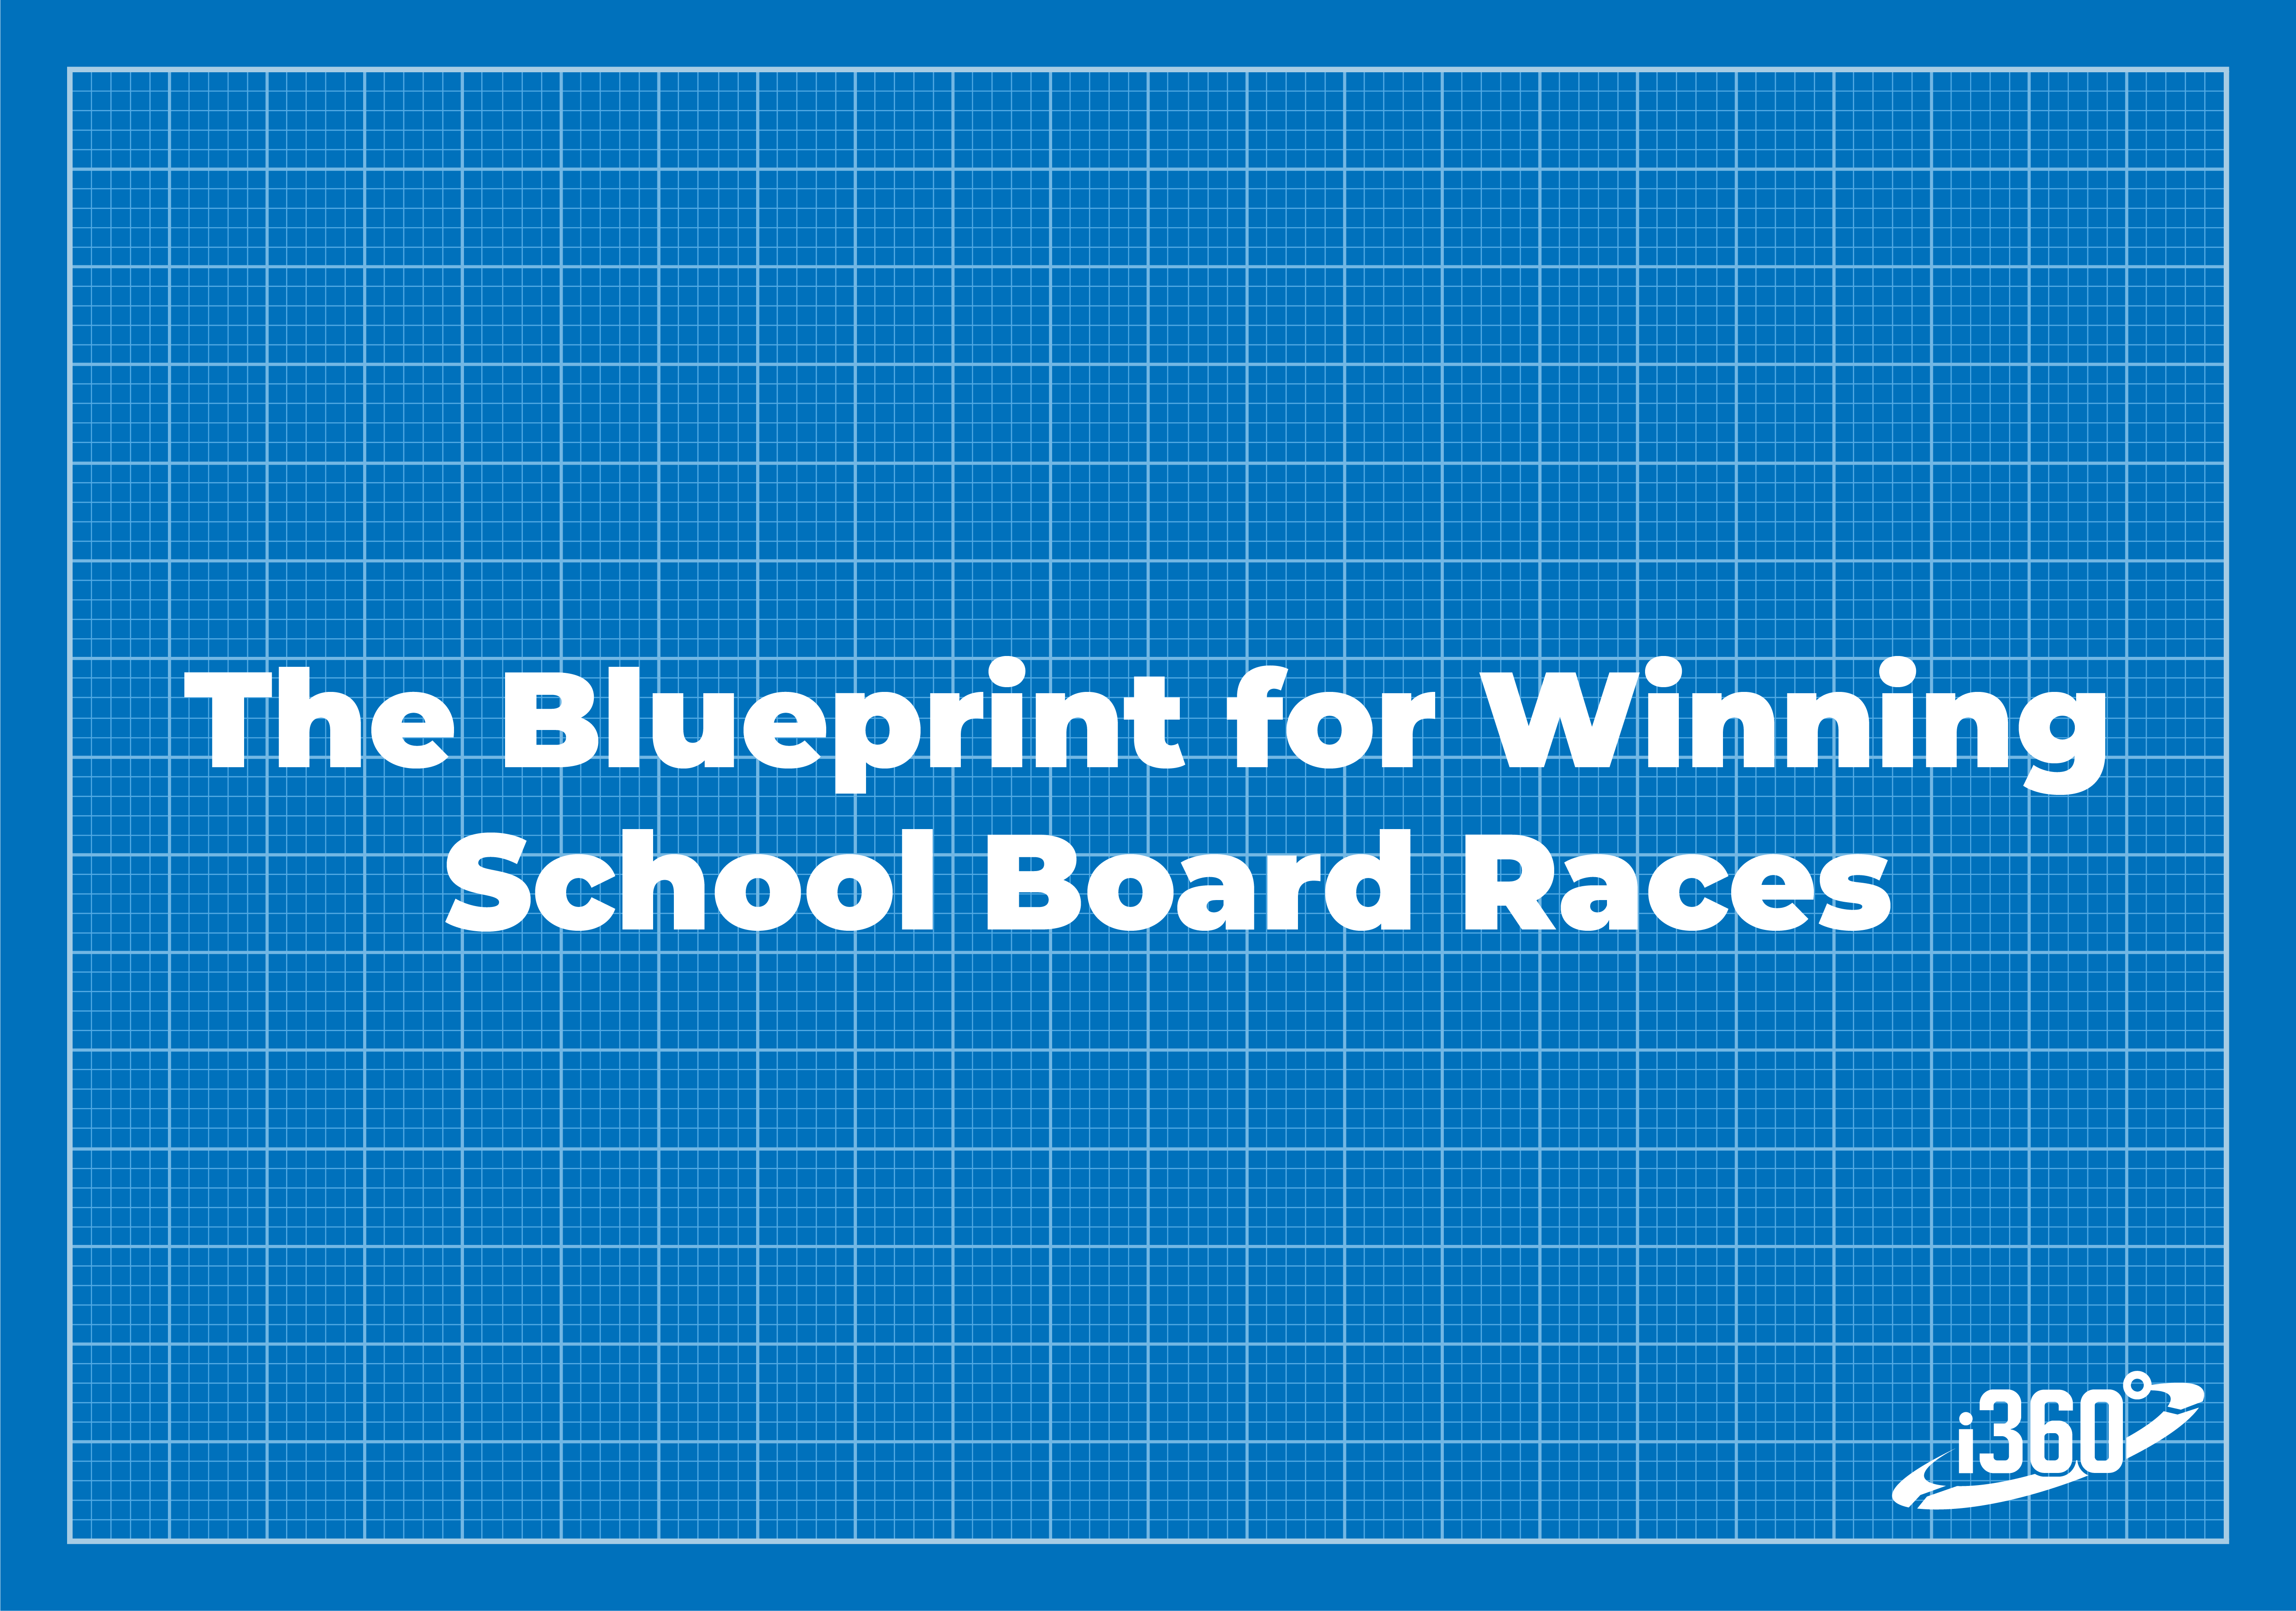 The blueprint for winning school board races